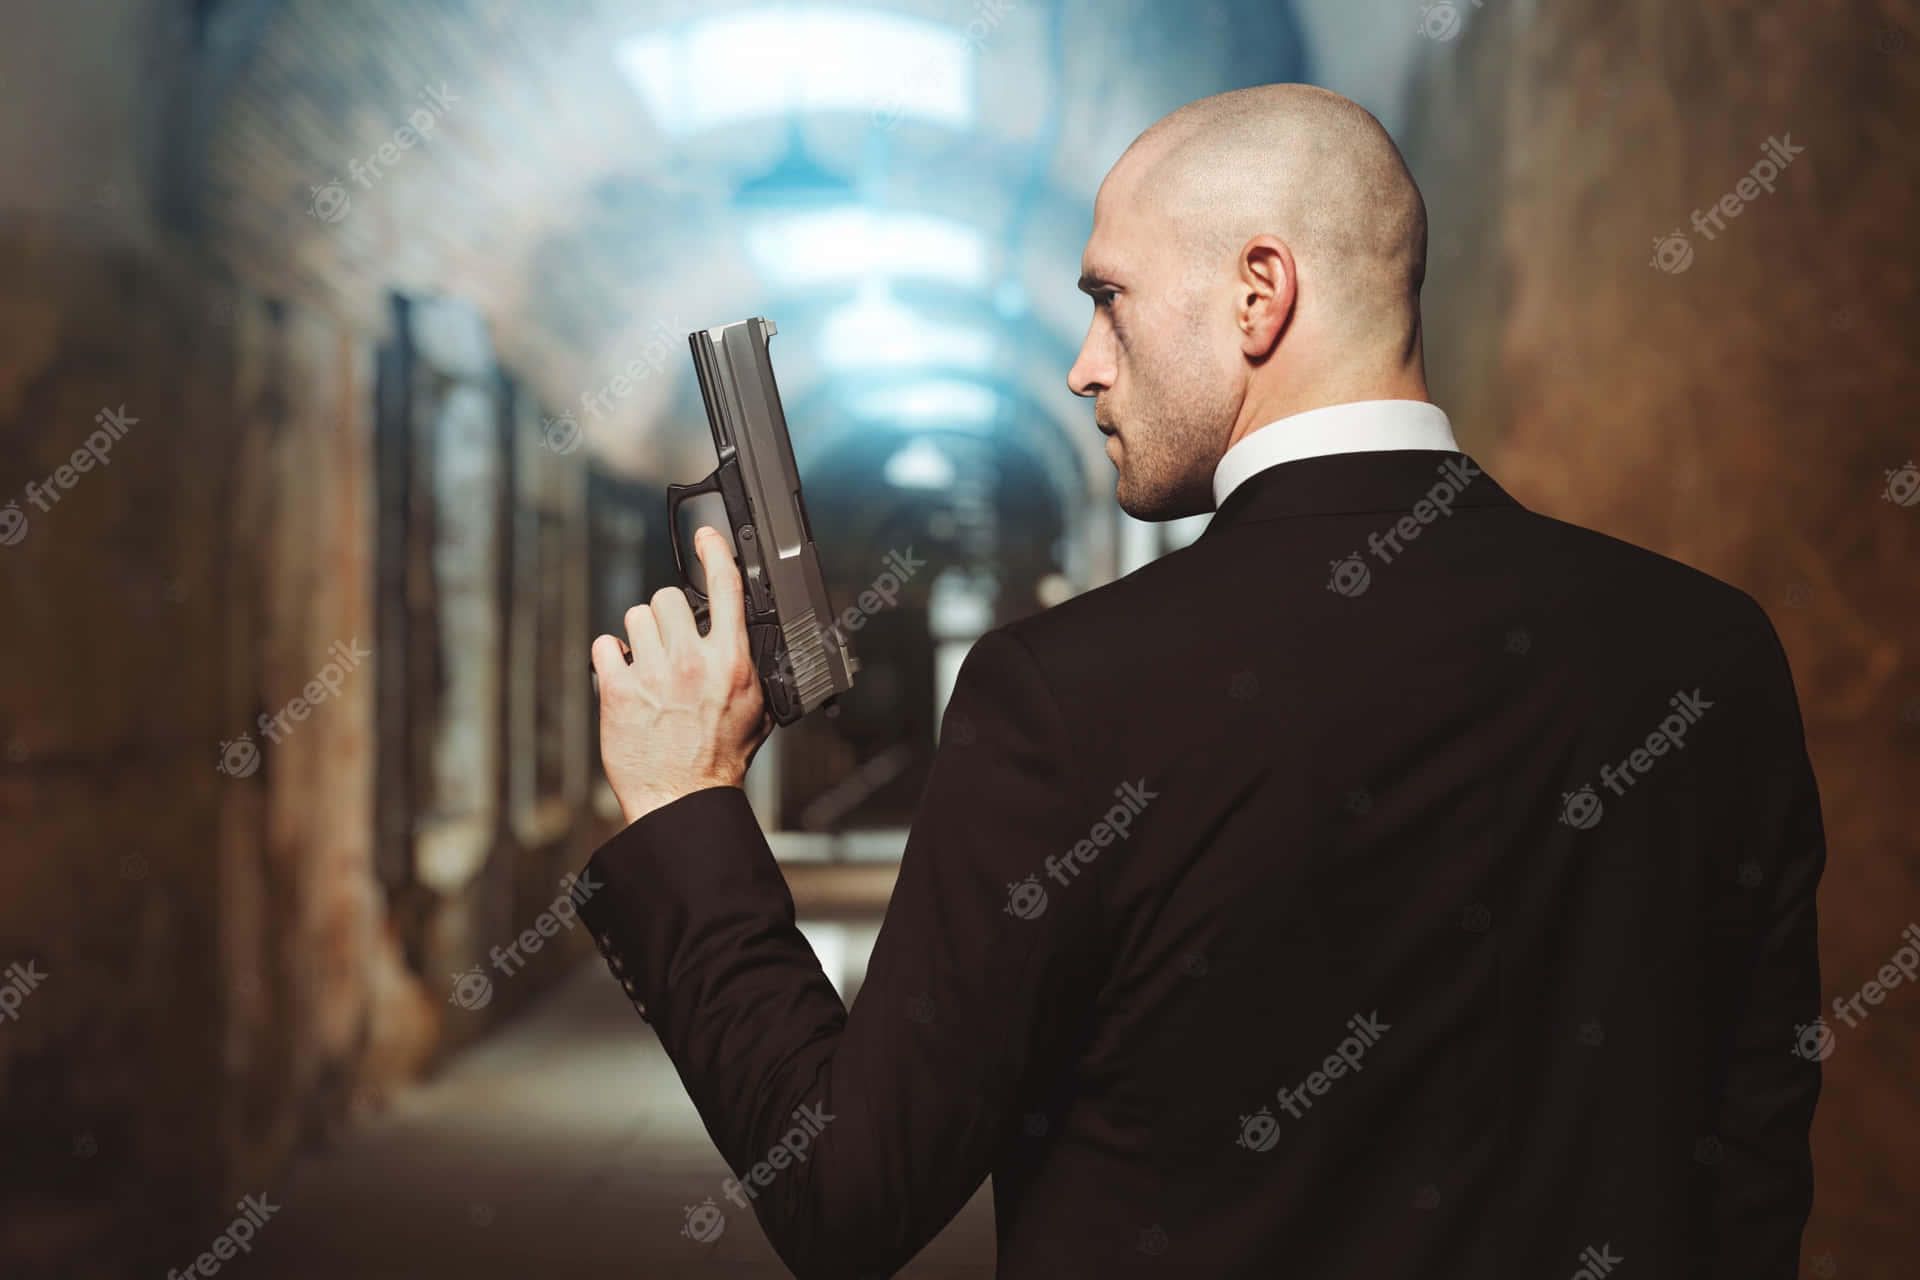 Bald Manin Suit Holding Gun Wallpaper